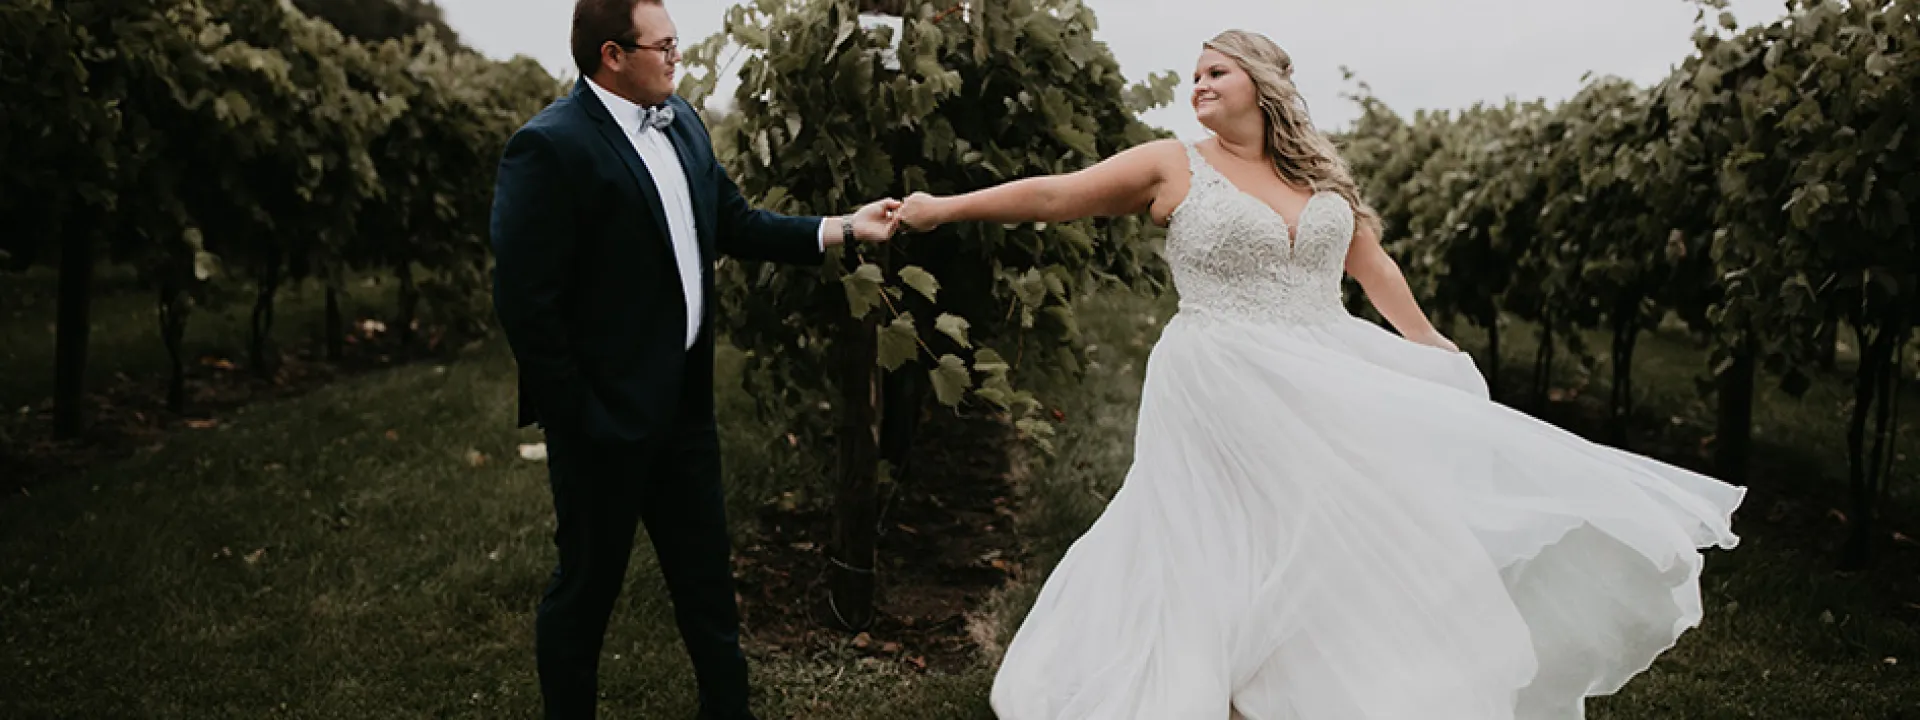 Melissa and Everett wed at Carlos Creek Winery